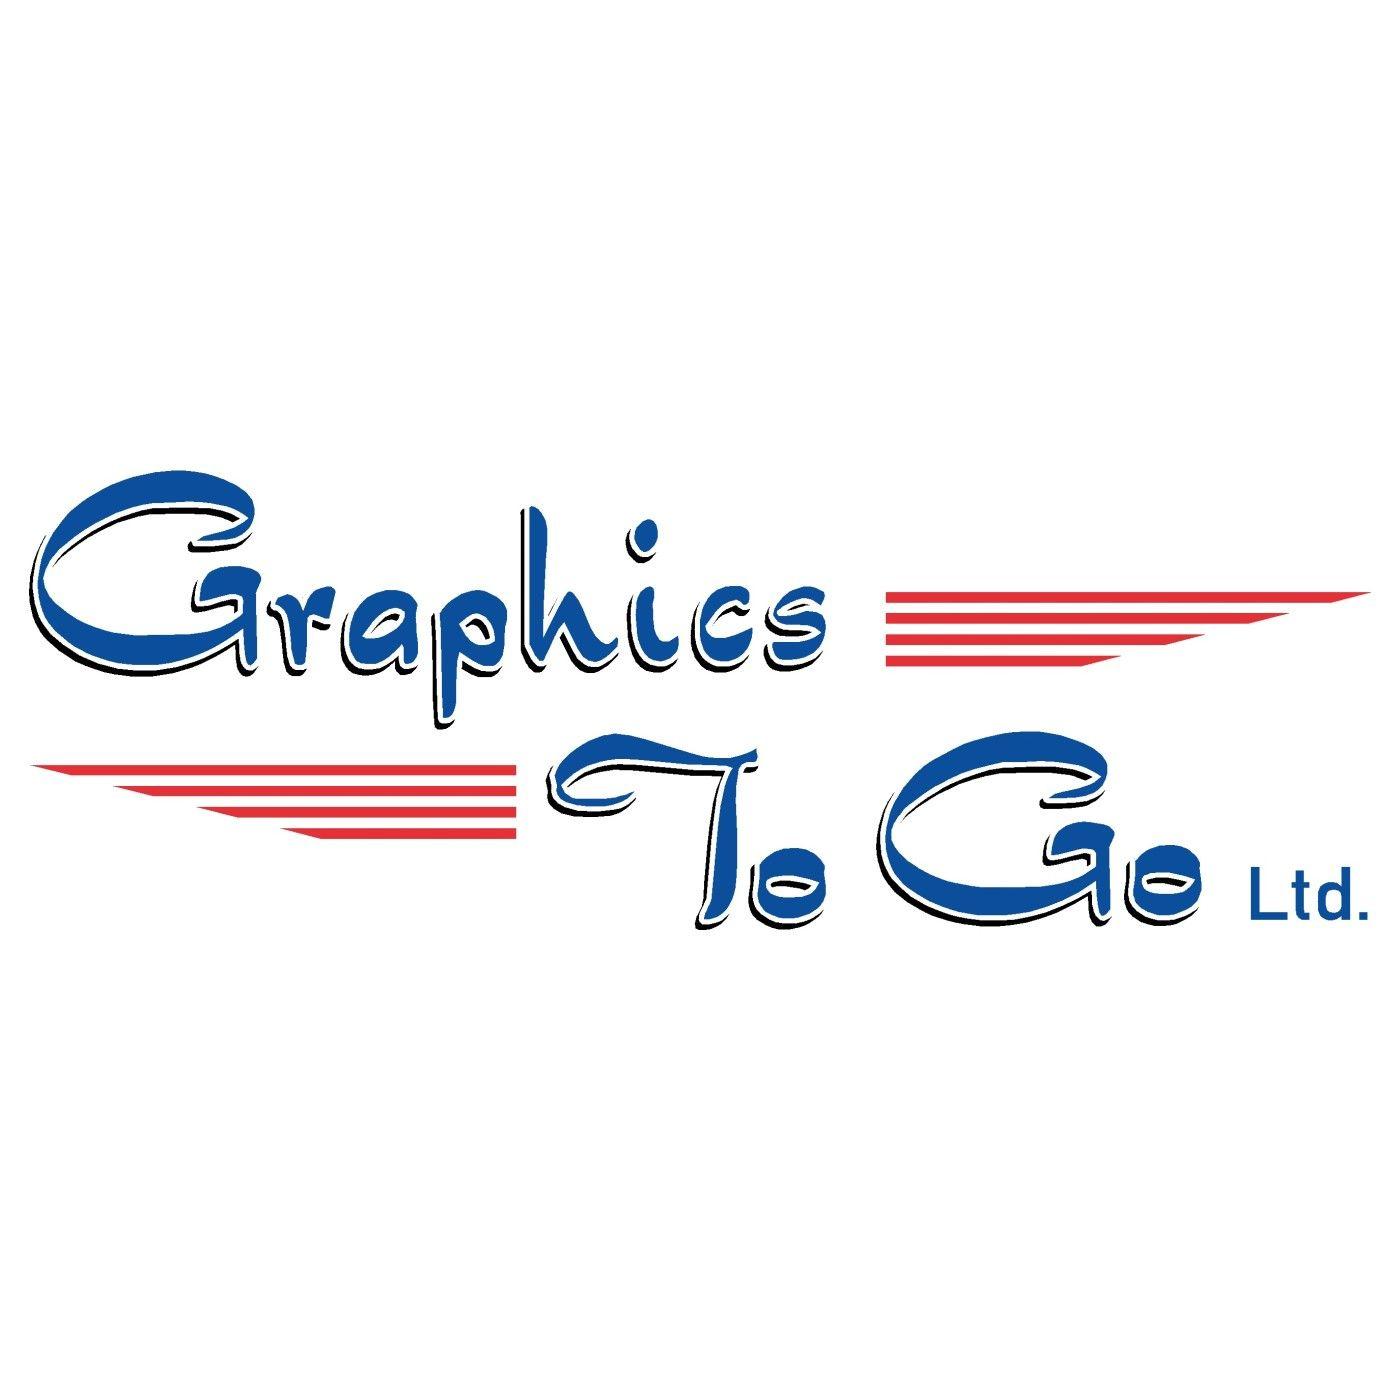 Hinckley Logo - Graphics To Go Makers General in Hinckley, Leicestershire